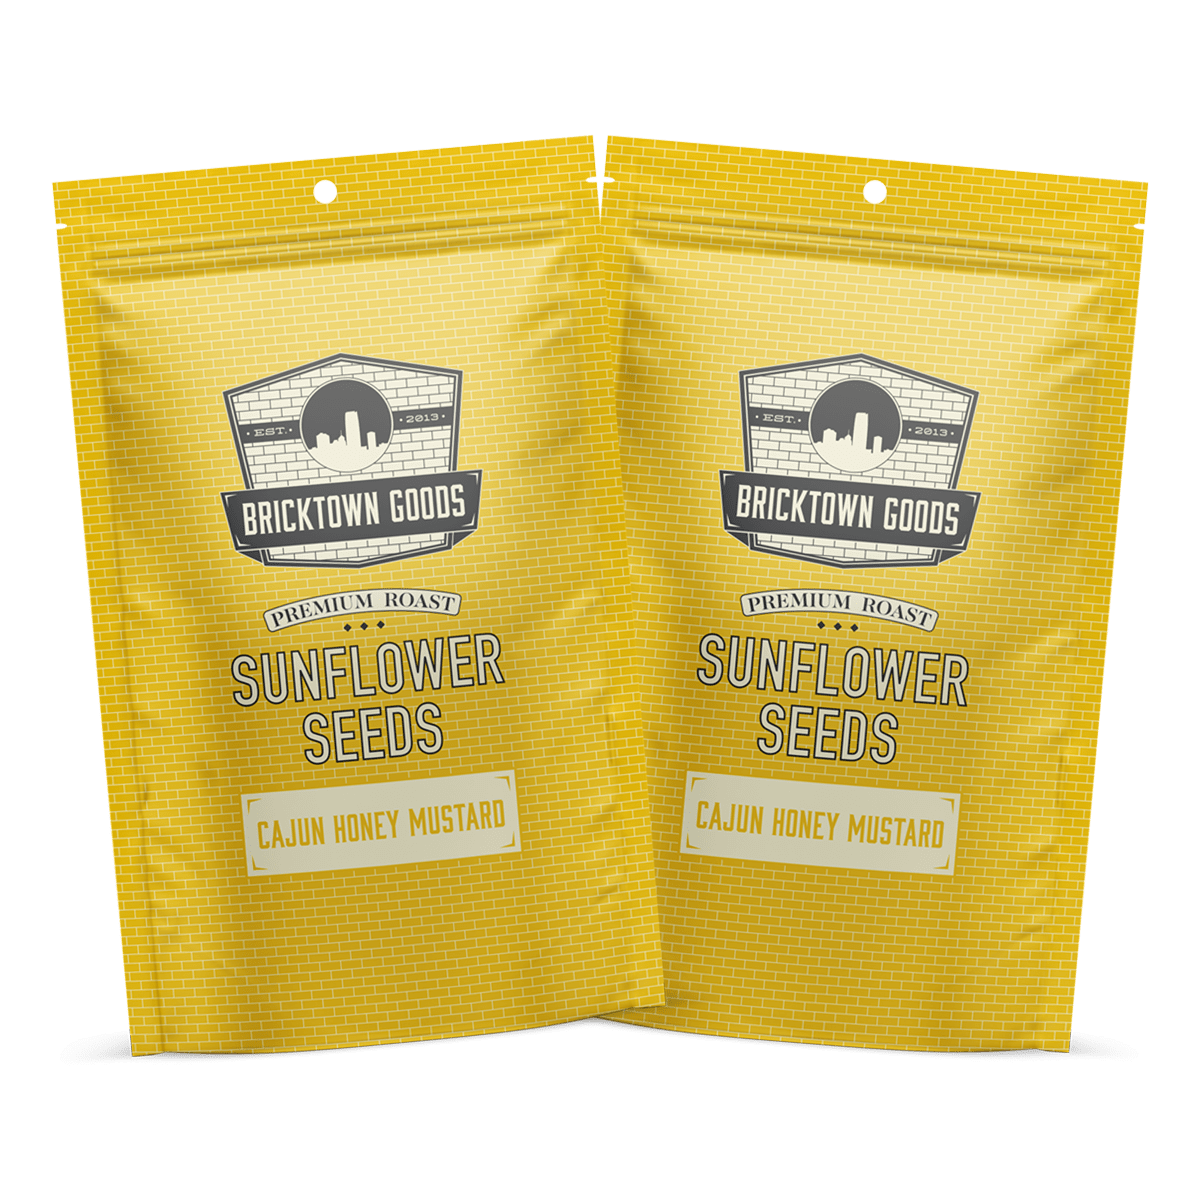 Premium Roast Sunflower Seeds - Cajun Honey Mustard by Bricktown Roasters